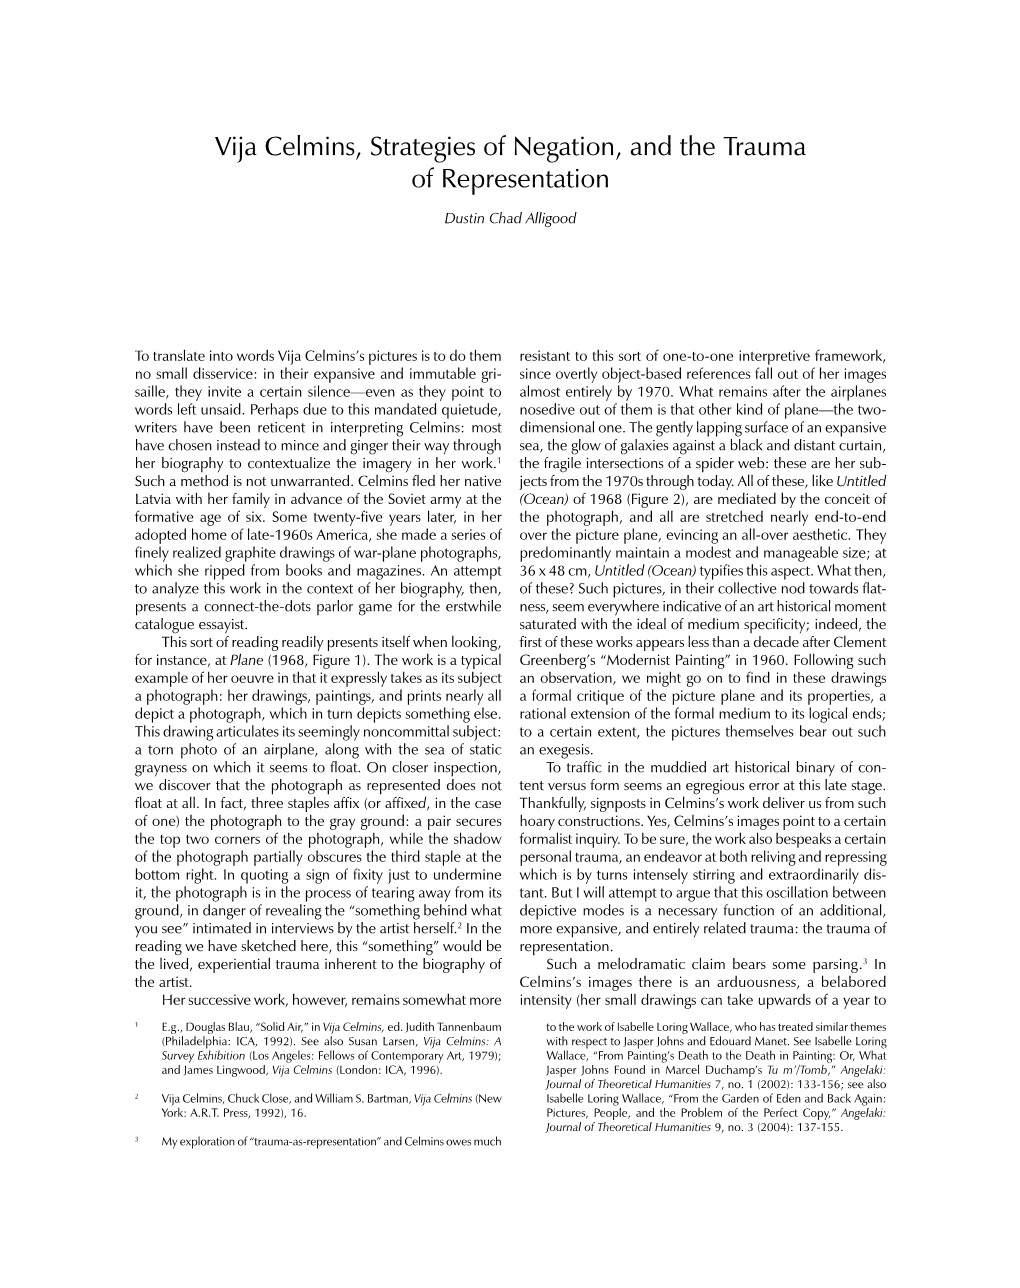 Vija Celmins, Strategies of Negation, and the Trauma of Representation